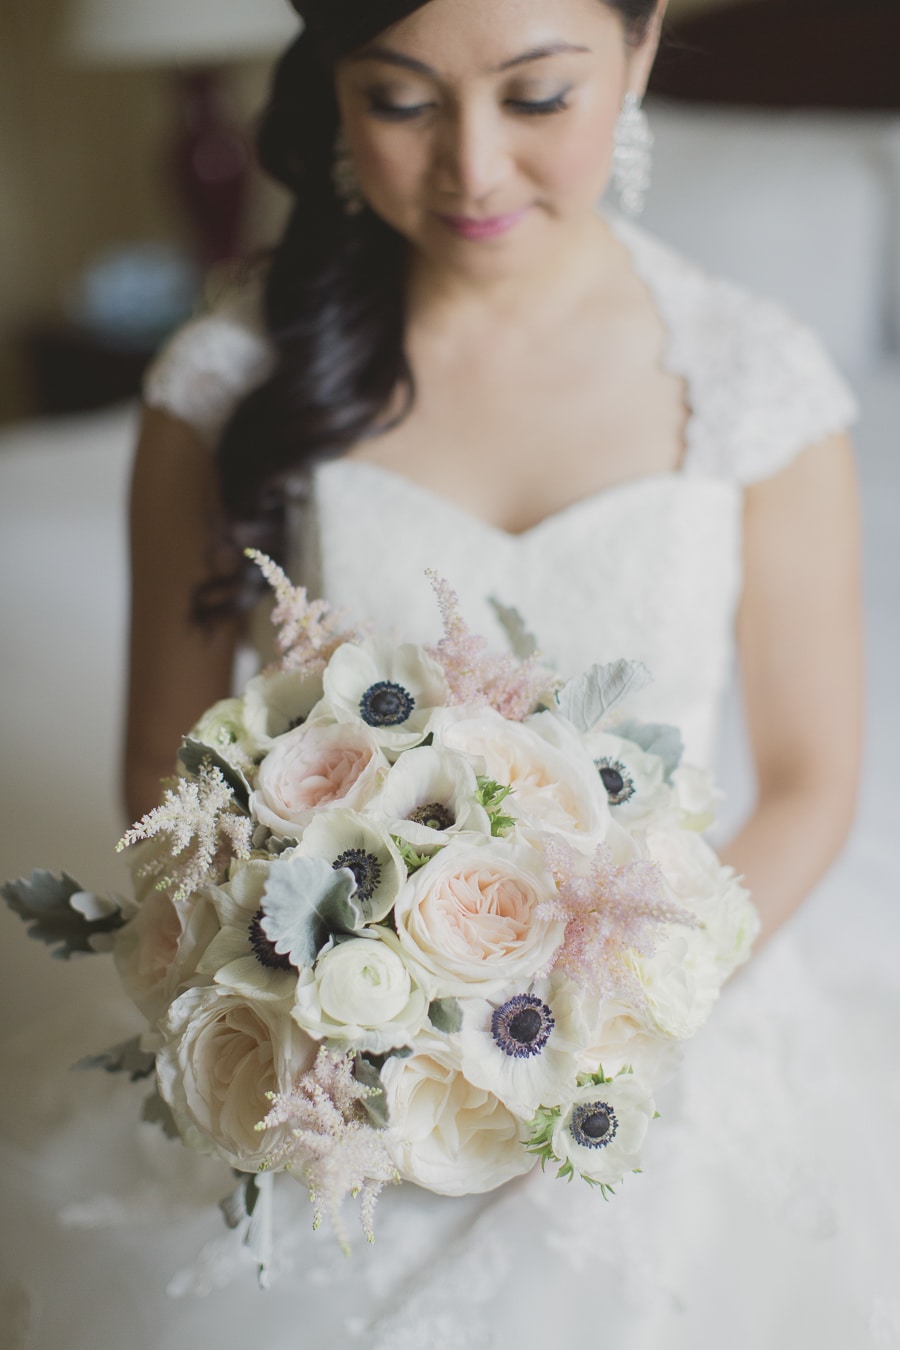 Romantic Blush and Tiffany-inspired wedding